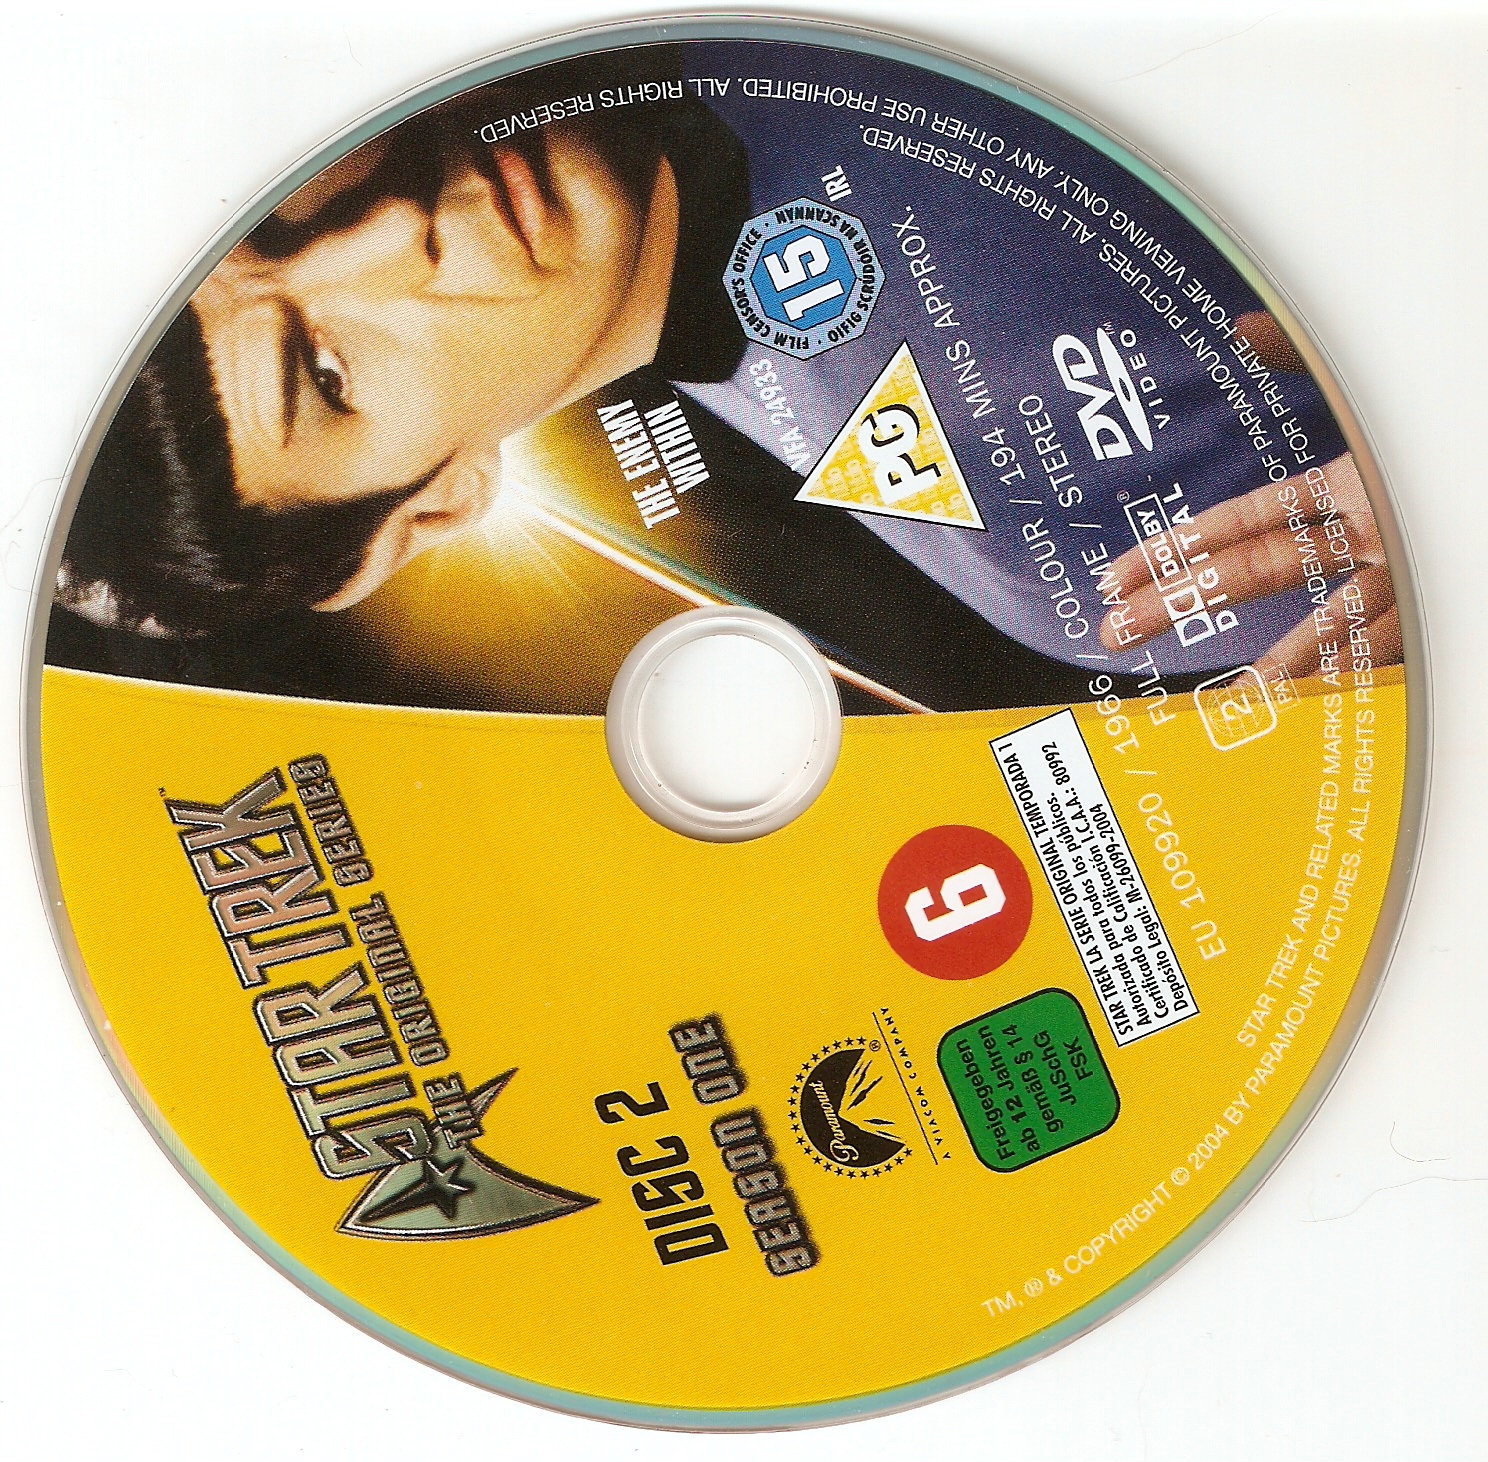 Star trek saison 1 DVD 2